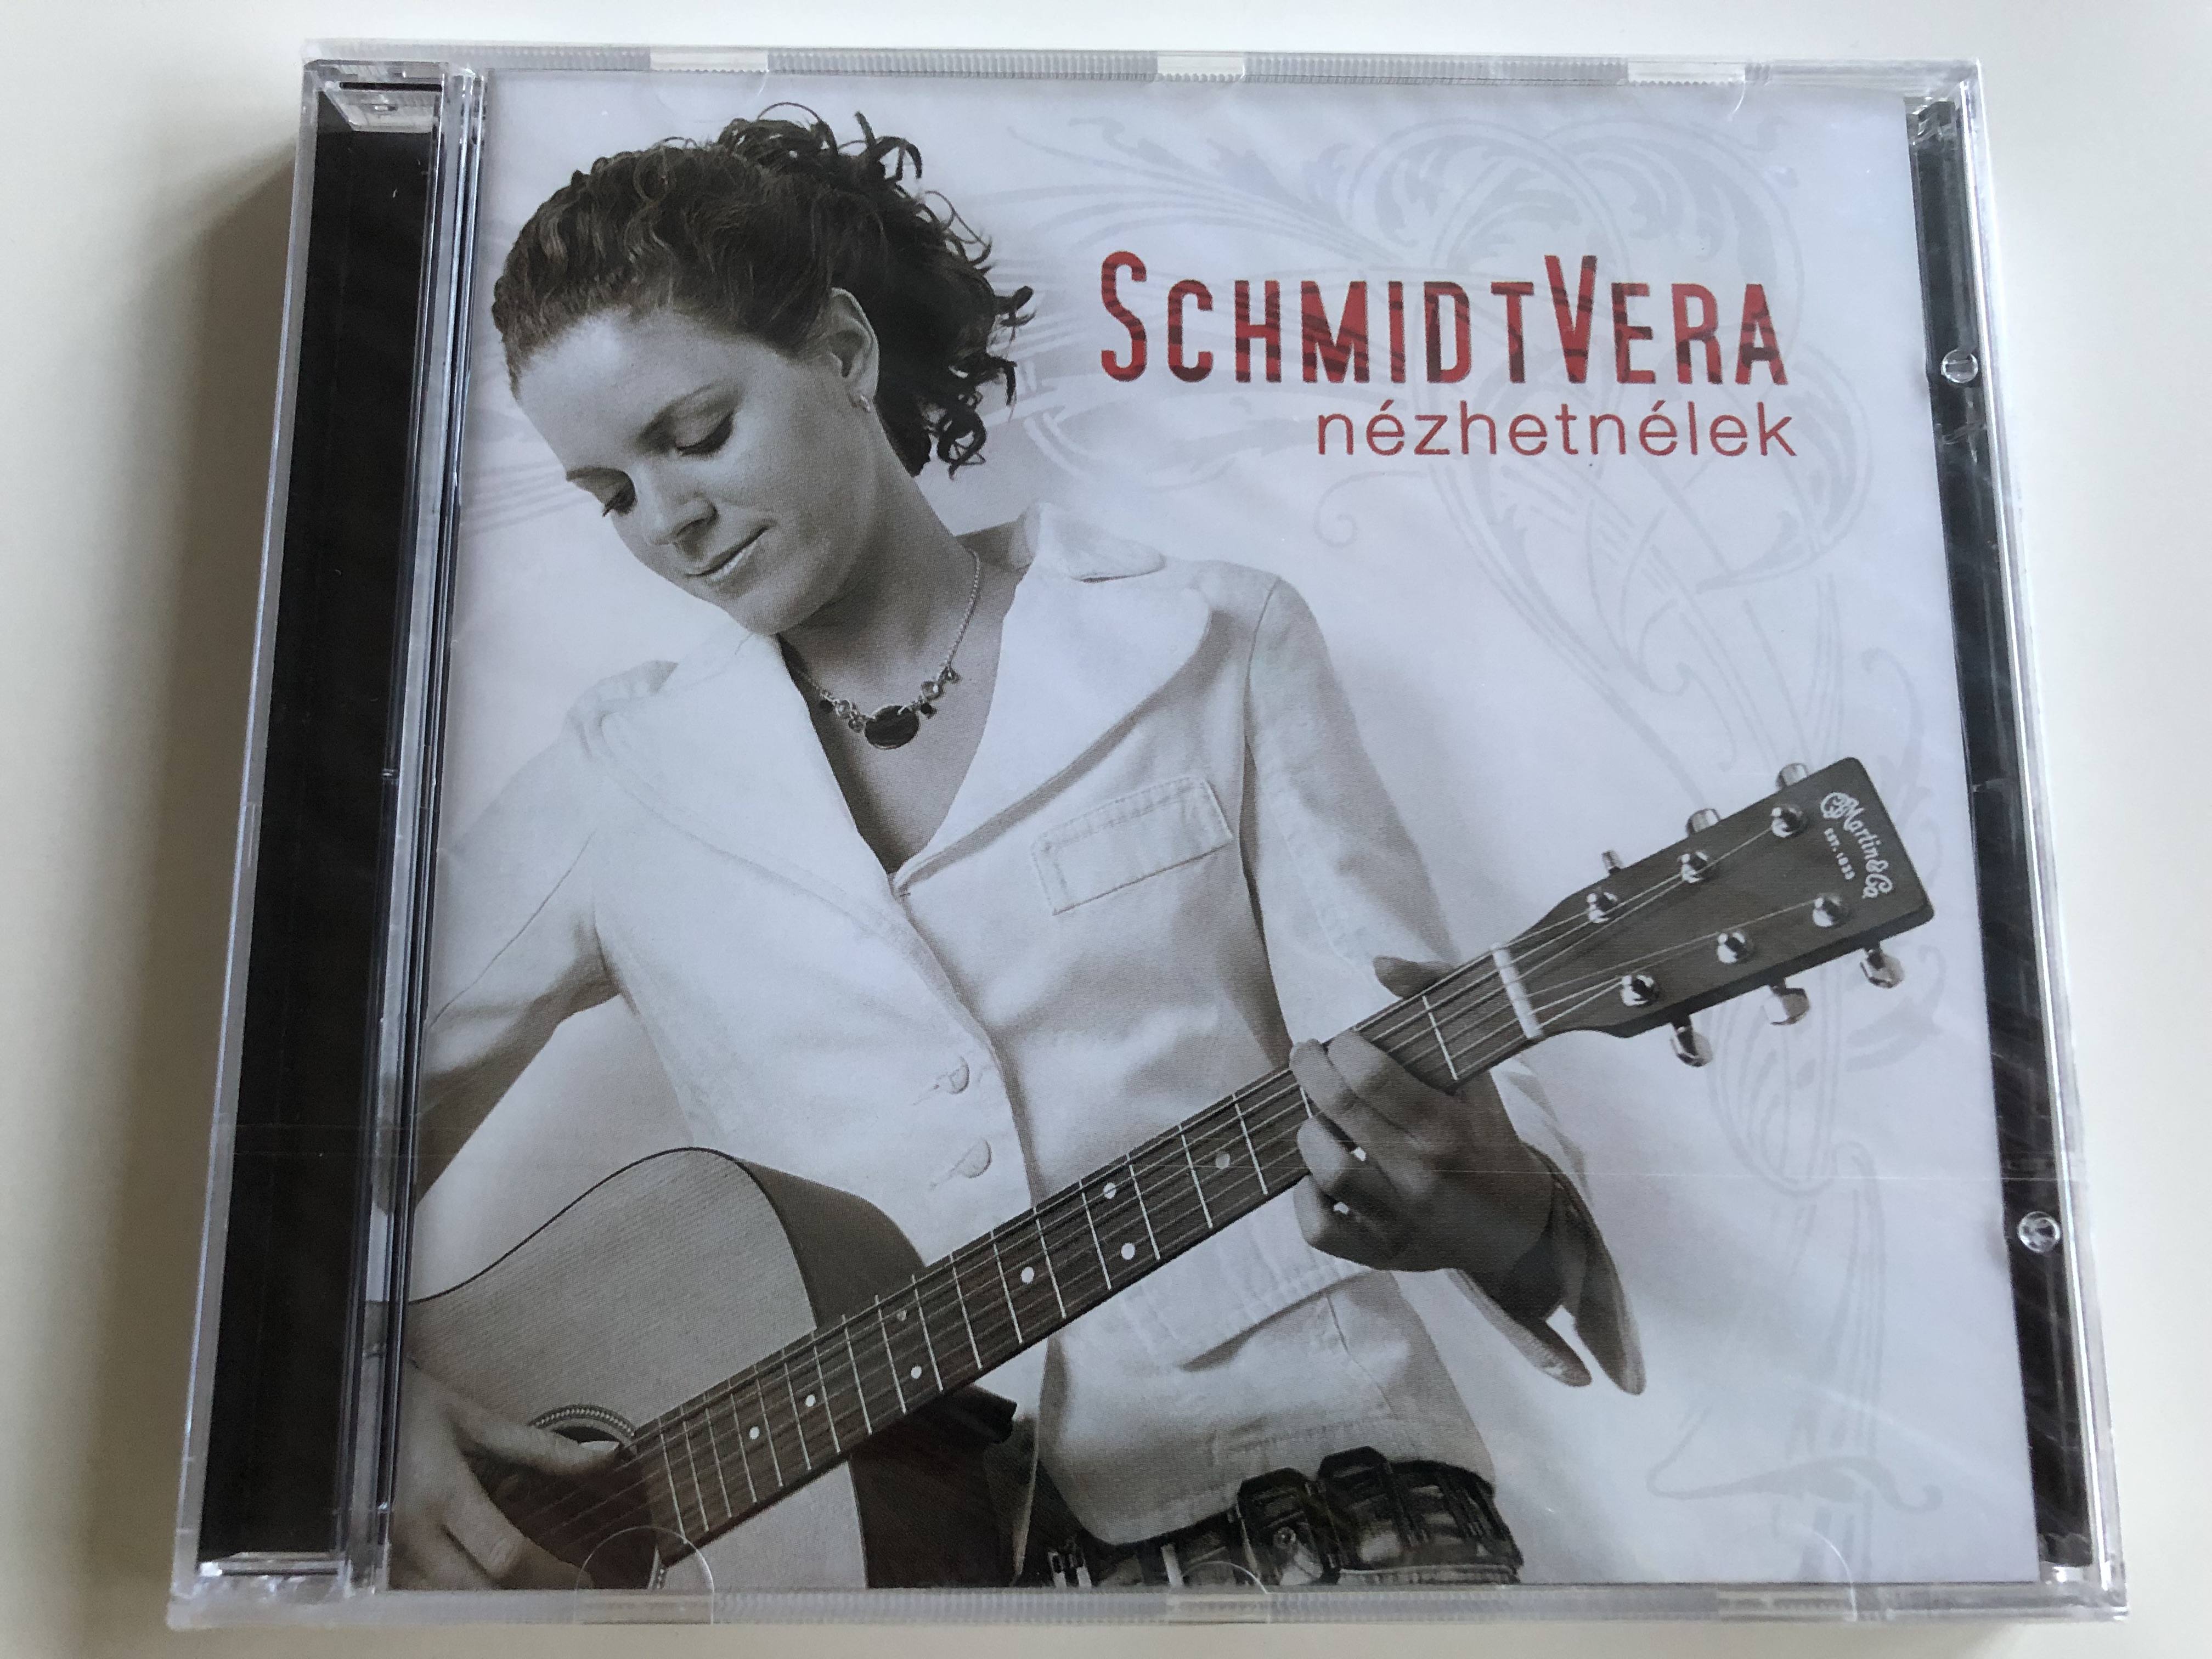 schmidt-vera-n-zhetn-lek-audio-cd-2005-emi-1-.jpg